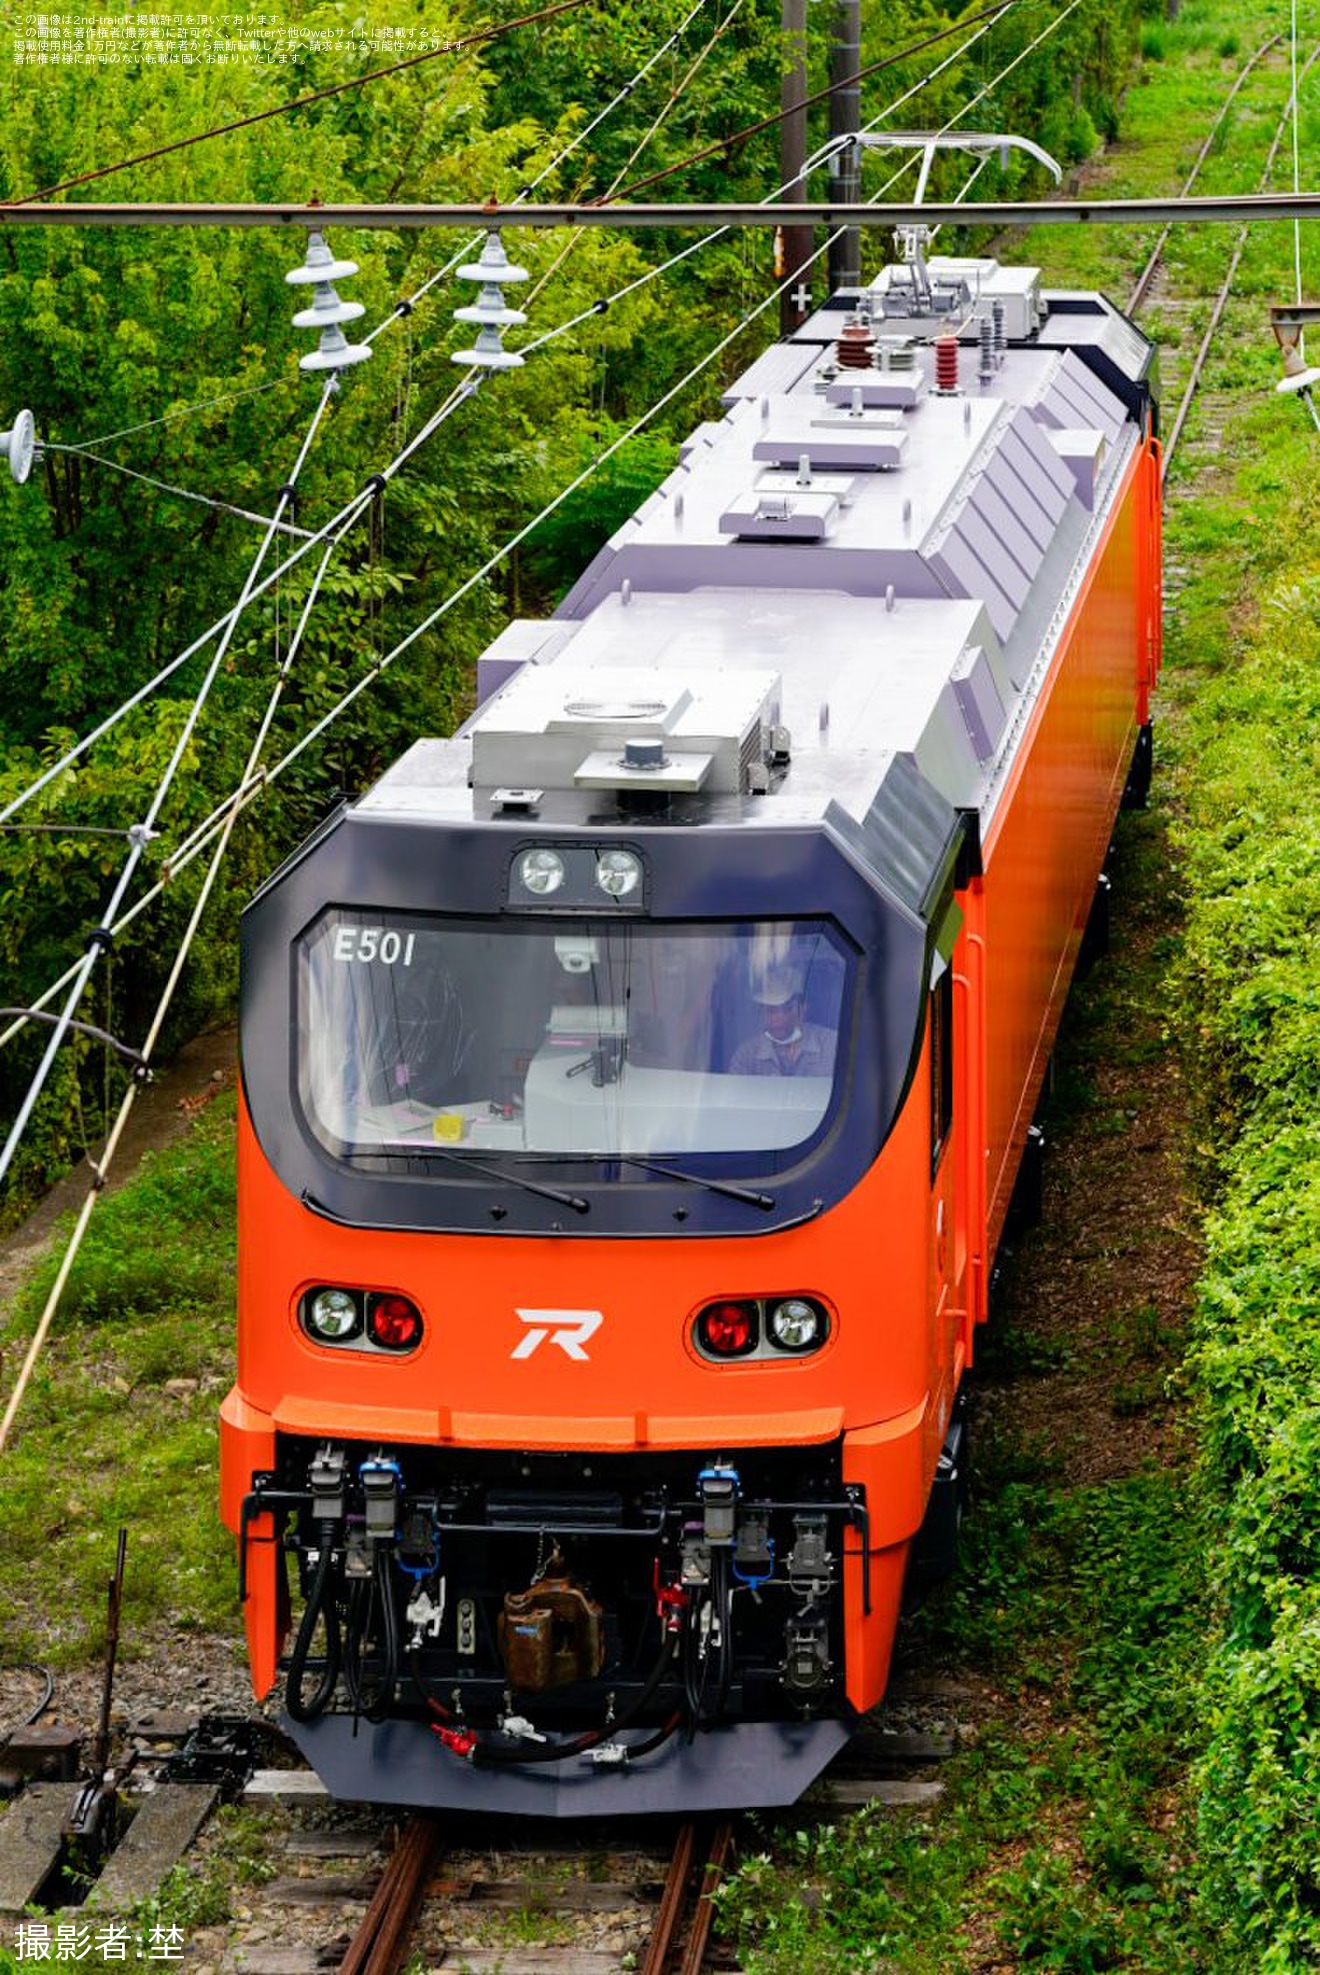 【台鐵】台湾鉄路管理局向けの新型電機E500型E501が東芝府中で試運転を実施の拡大写真